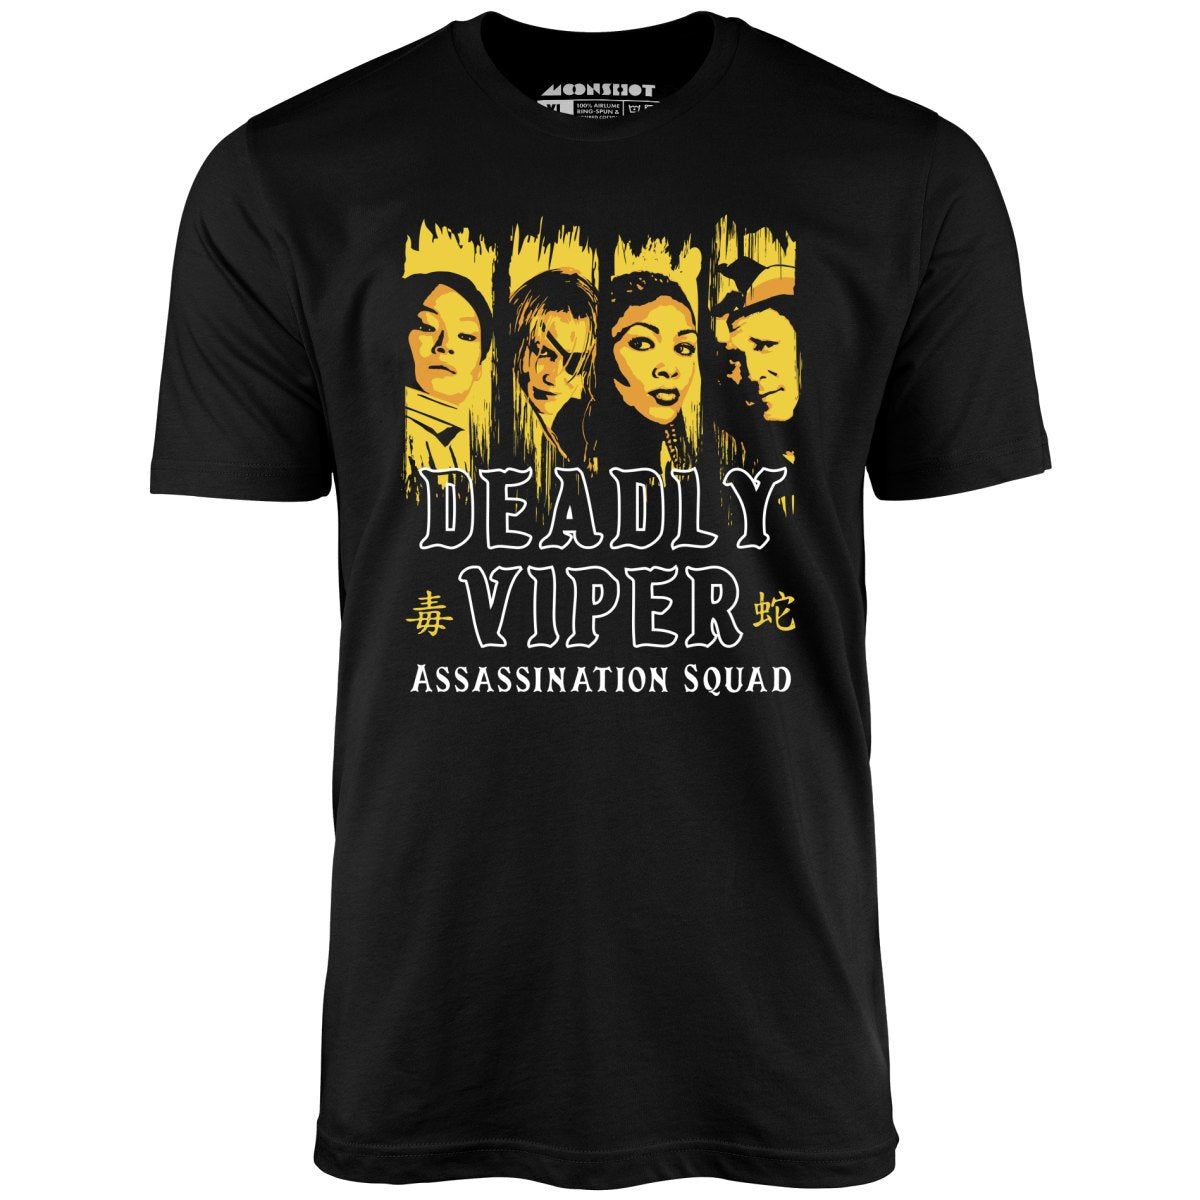 Deadly Viper Assassination Squad - Unisex T-Shirt